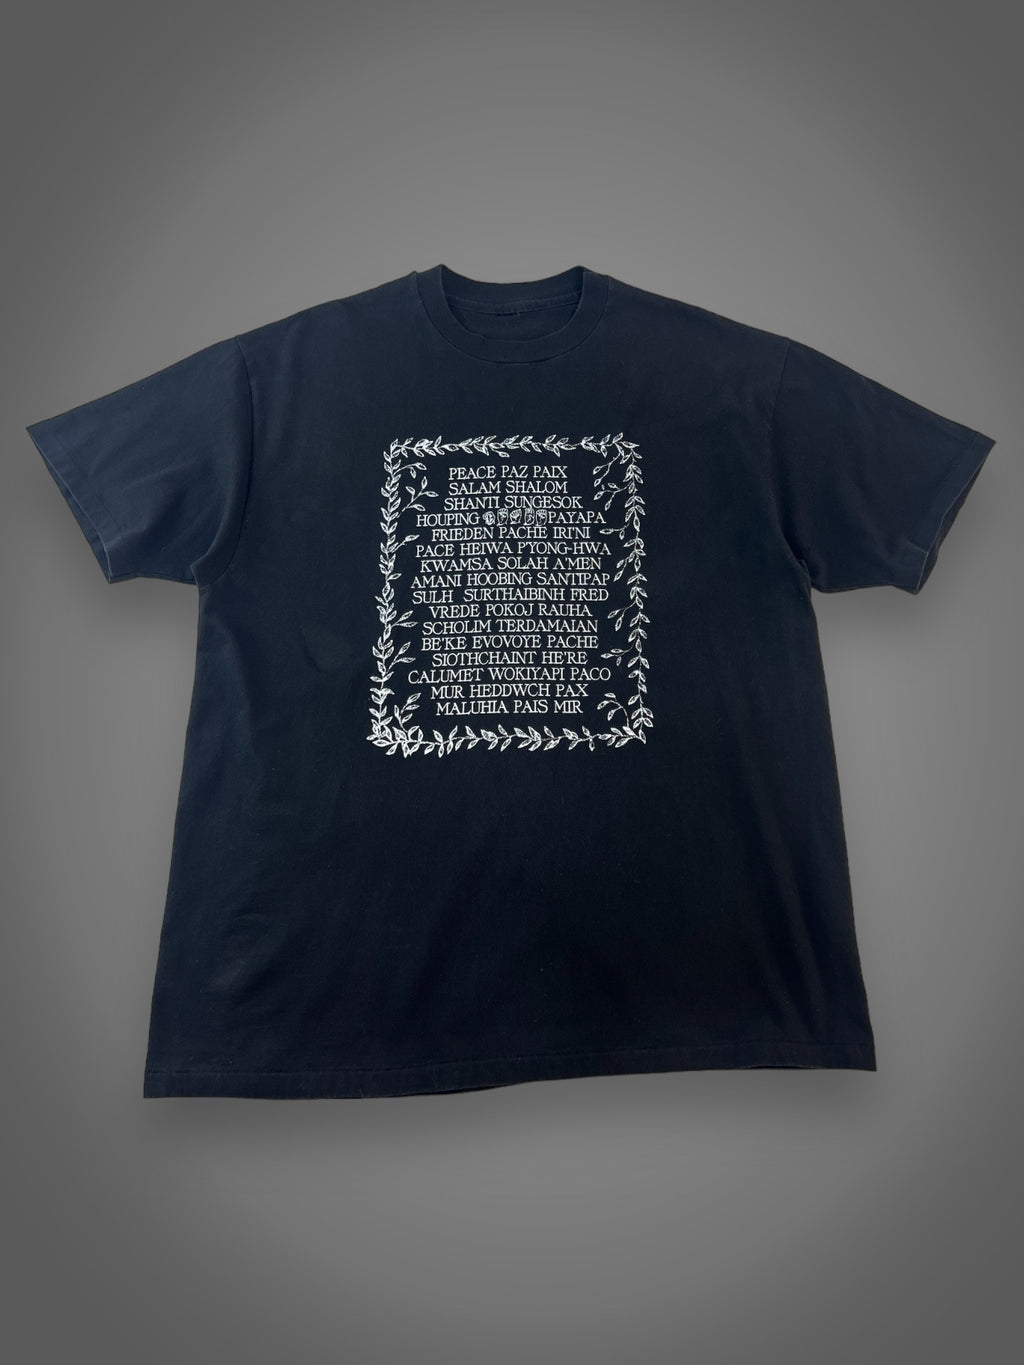 90s “Peace” in various languages t shirt fits L/XL